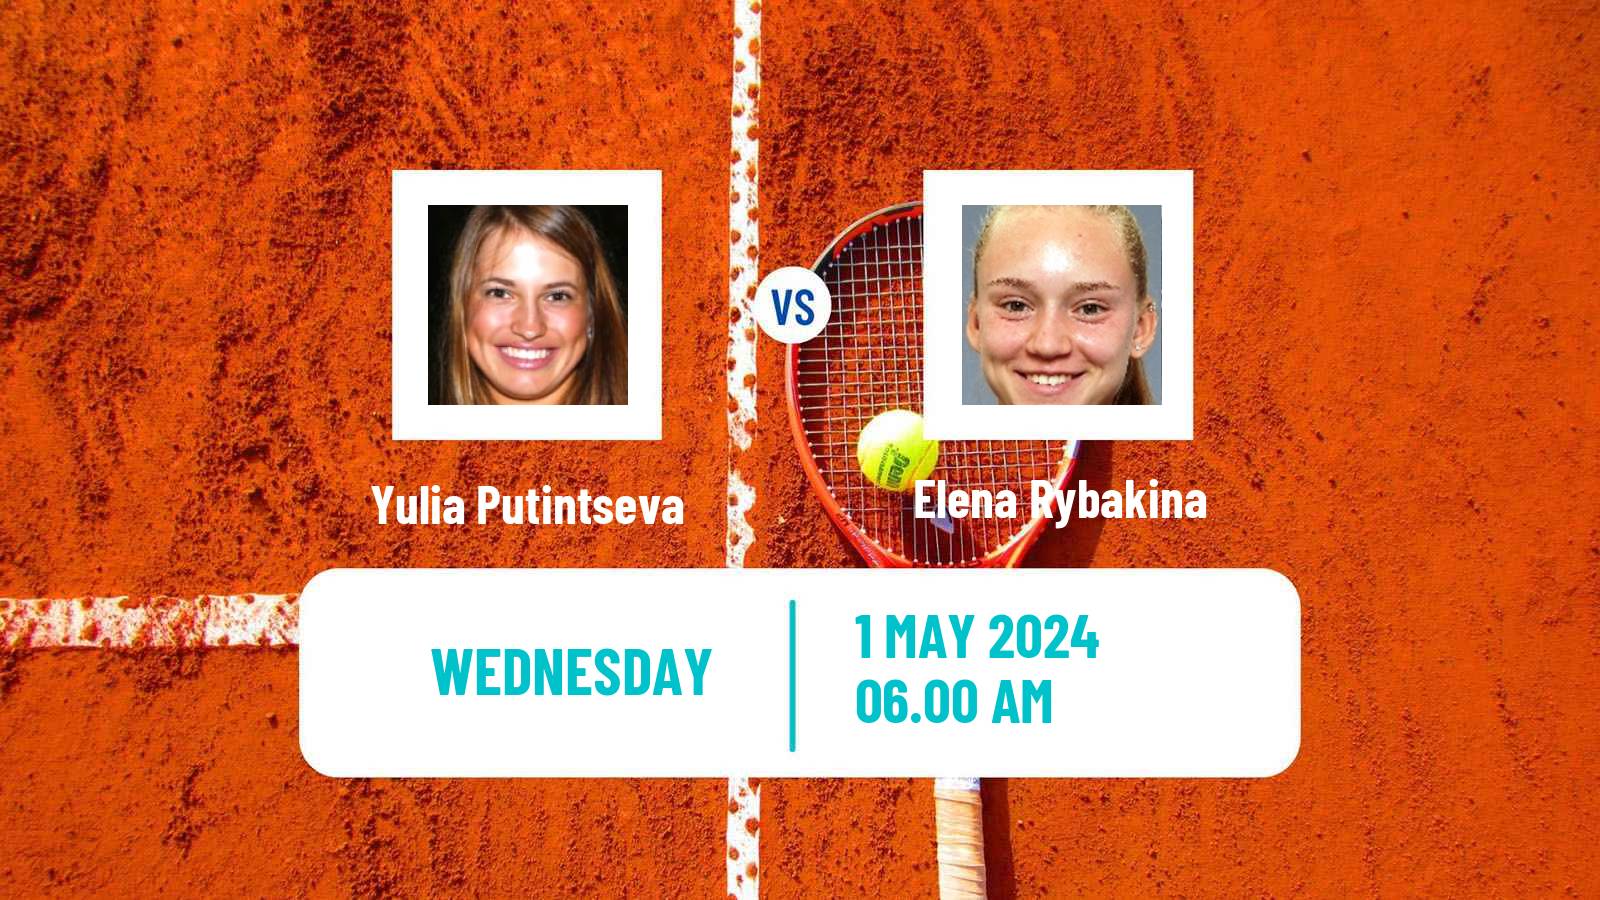 Tennis WTA Madrid Yulia Putintseva - Elena Rybakina